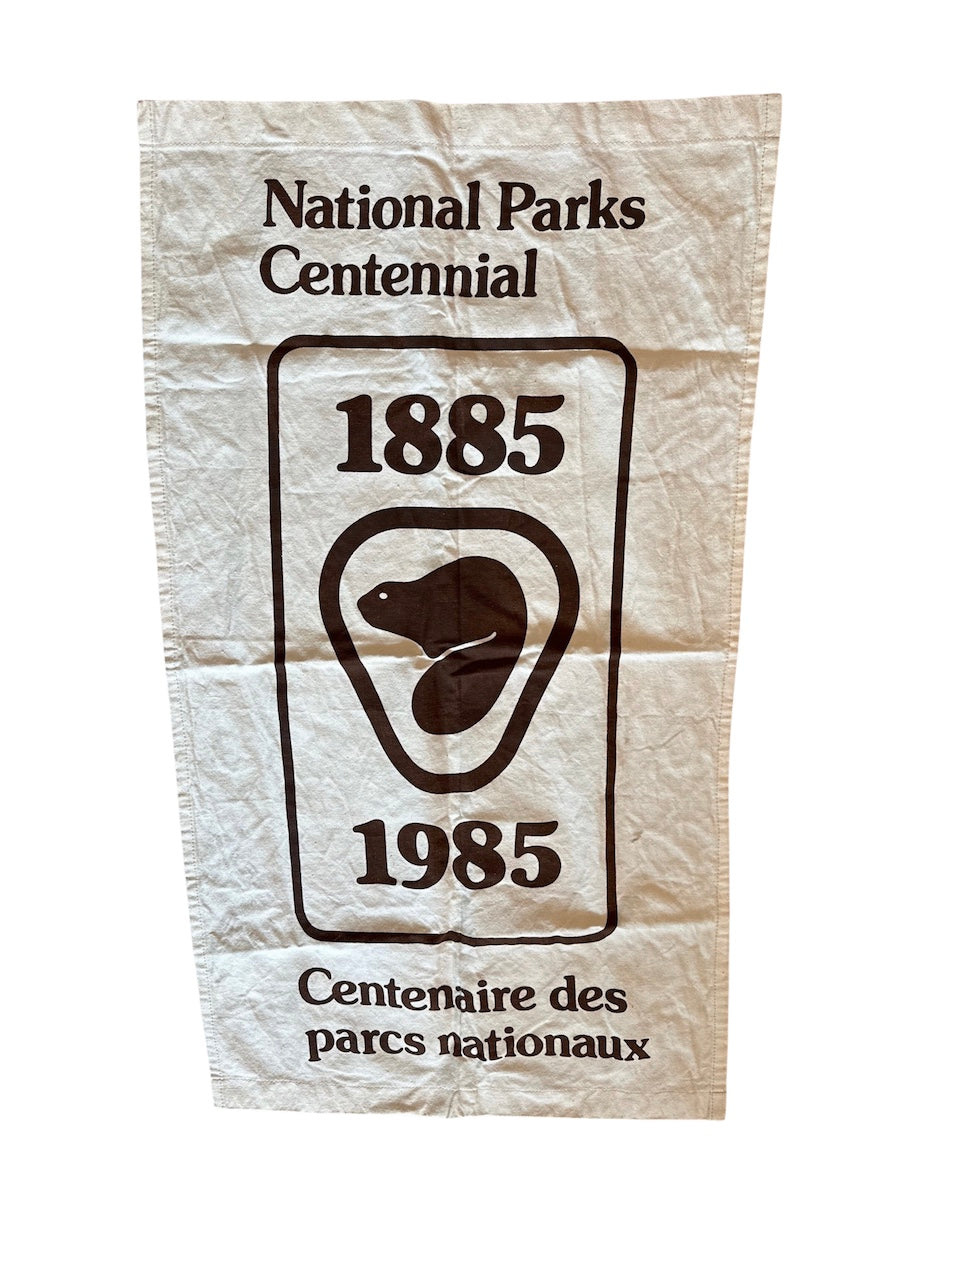 Vintage National Parks Centennial cotton banner